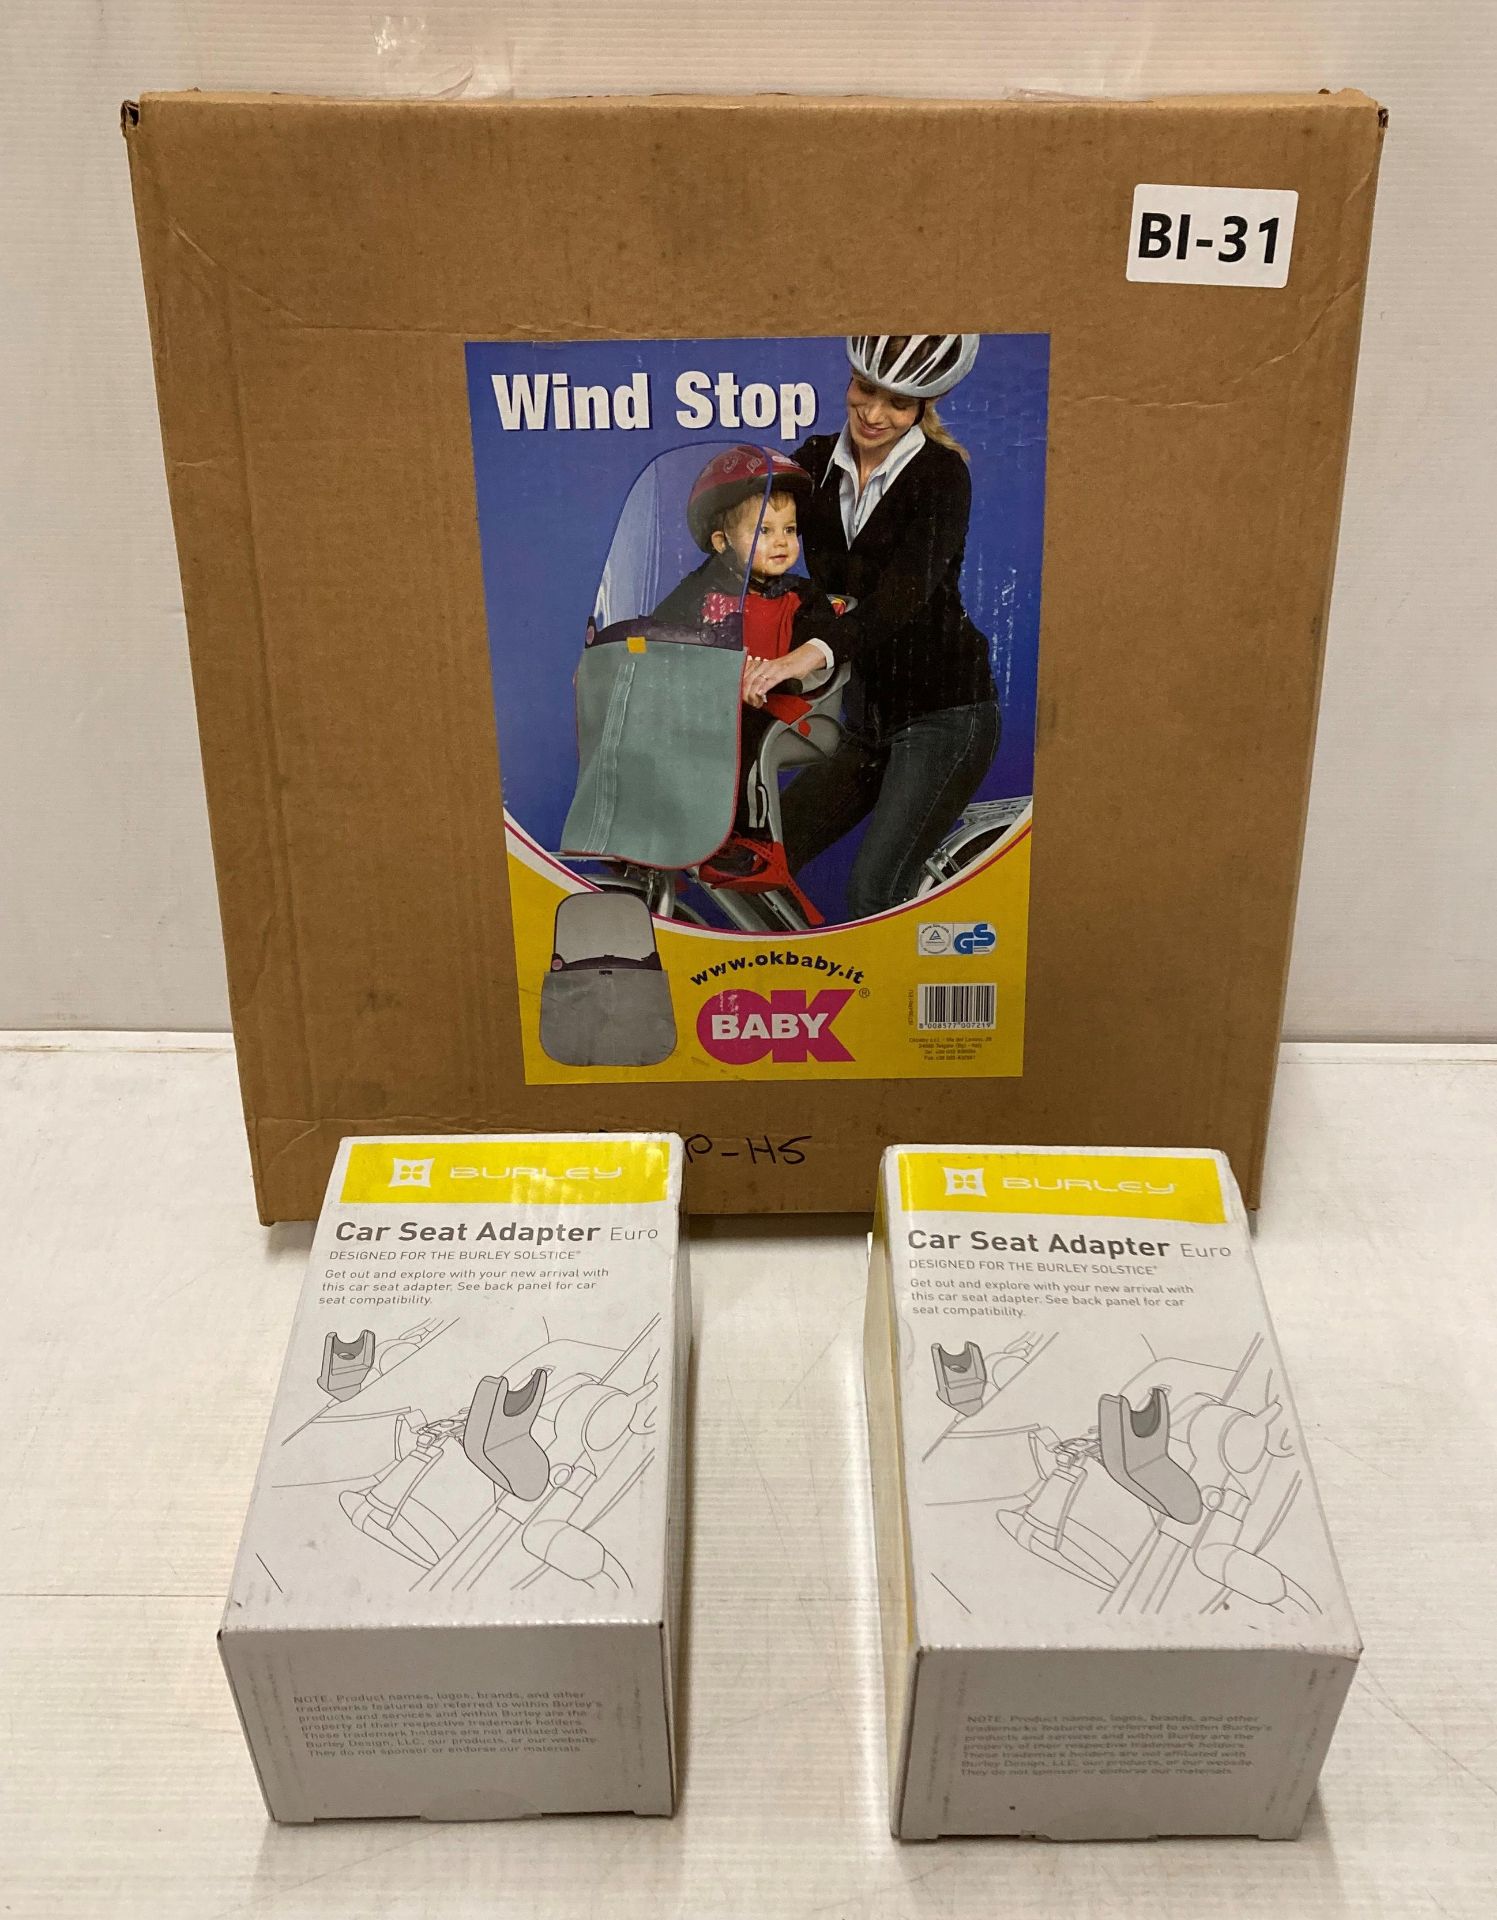 OK Baby Wind-Stop protector and 2 x Burley car seat adaptors (saleroom location: L07)